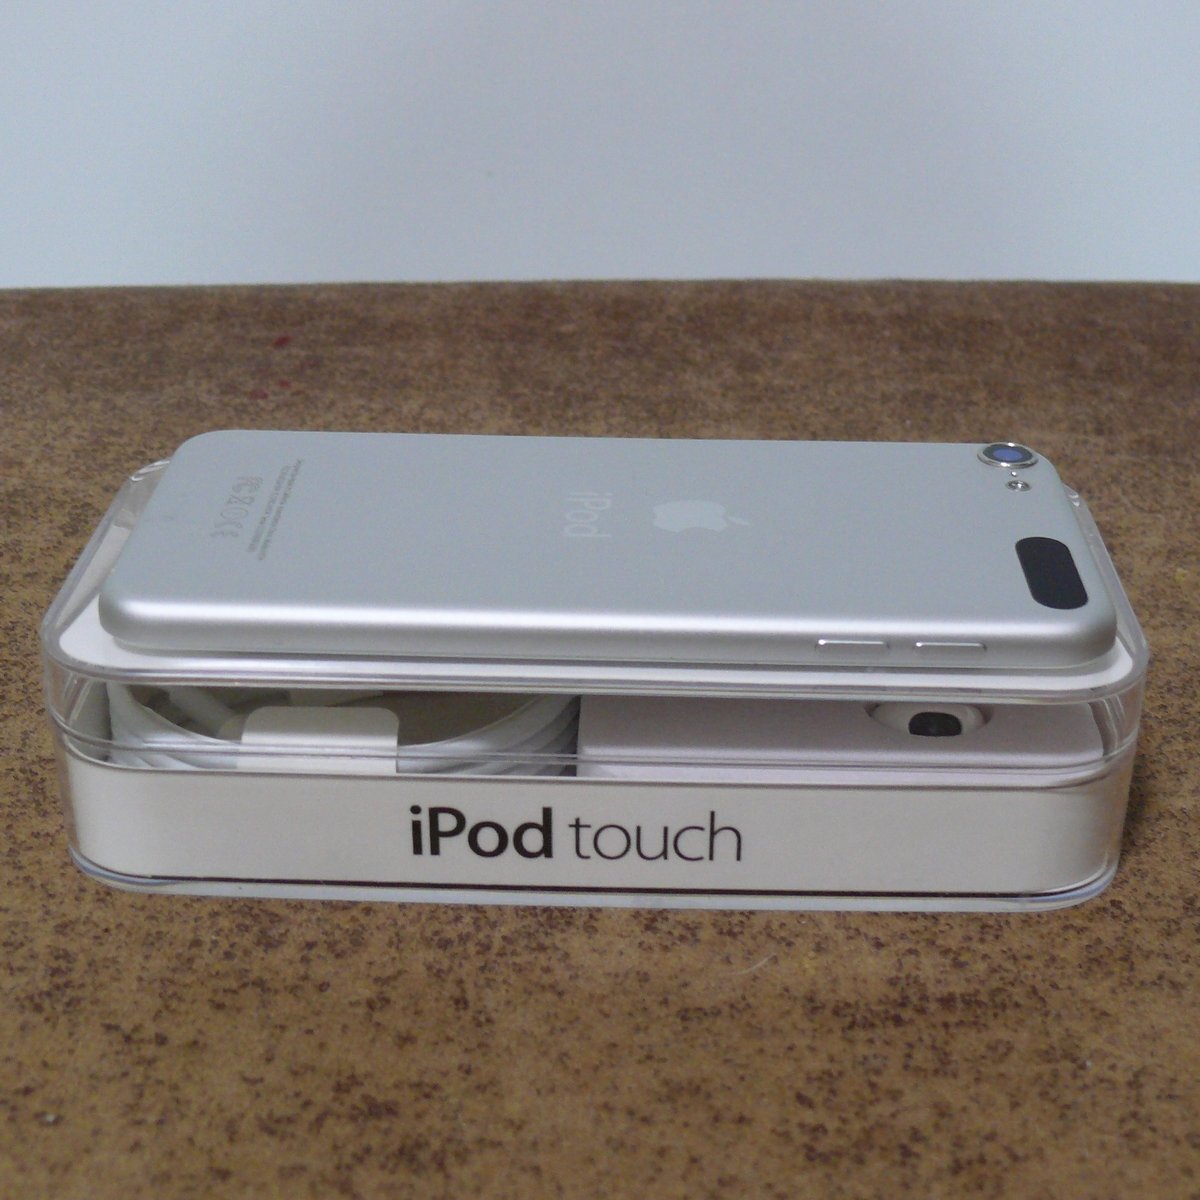 a256k☆Apple iPod touch 16GB シルバー☆wi-fi A1574 MKH42J/A☆初期化済☆付属品付き_画像5